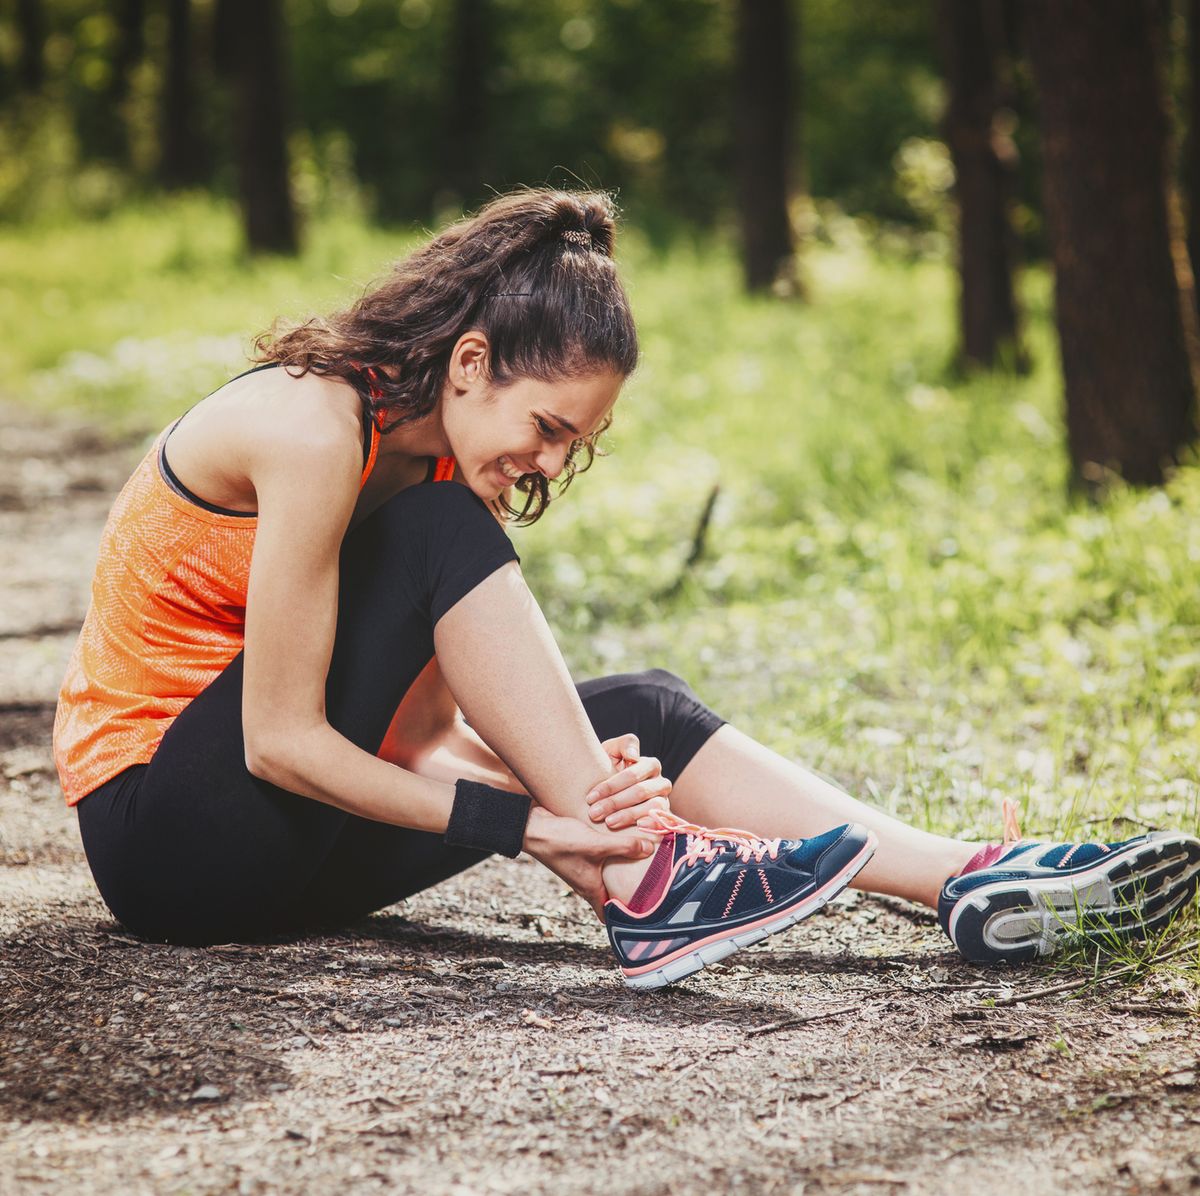 Trail running · Nike · Mujer · Deportes · El Corte Inglés (19)